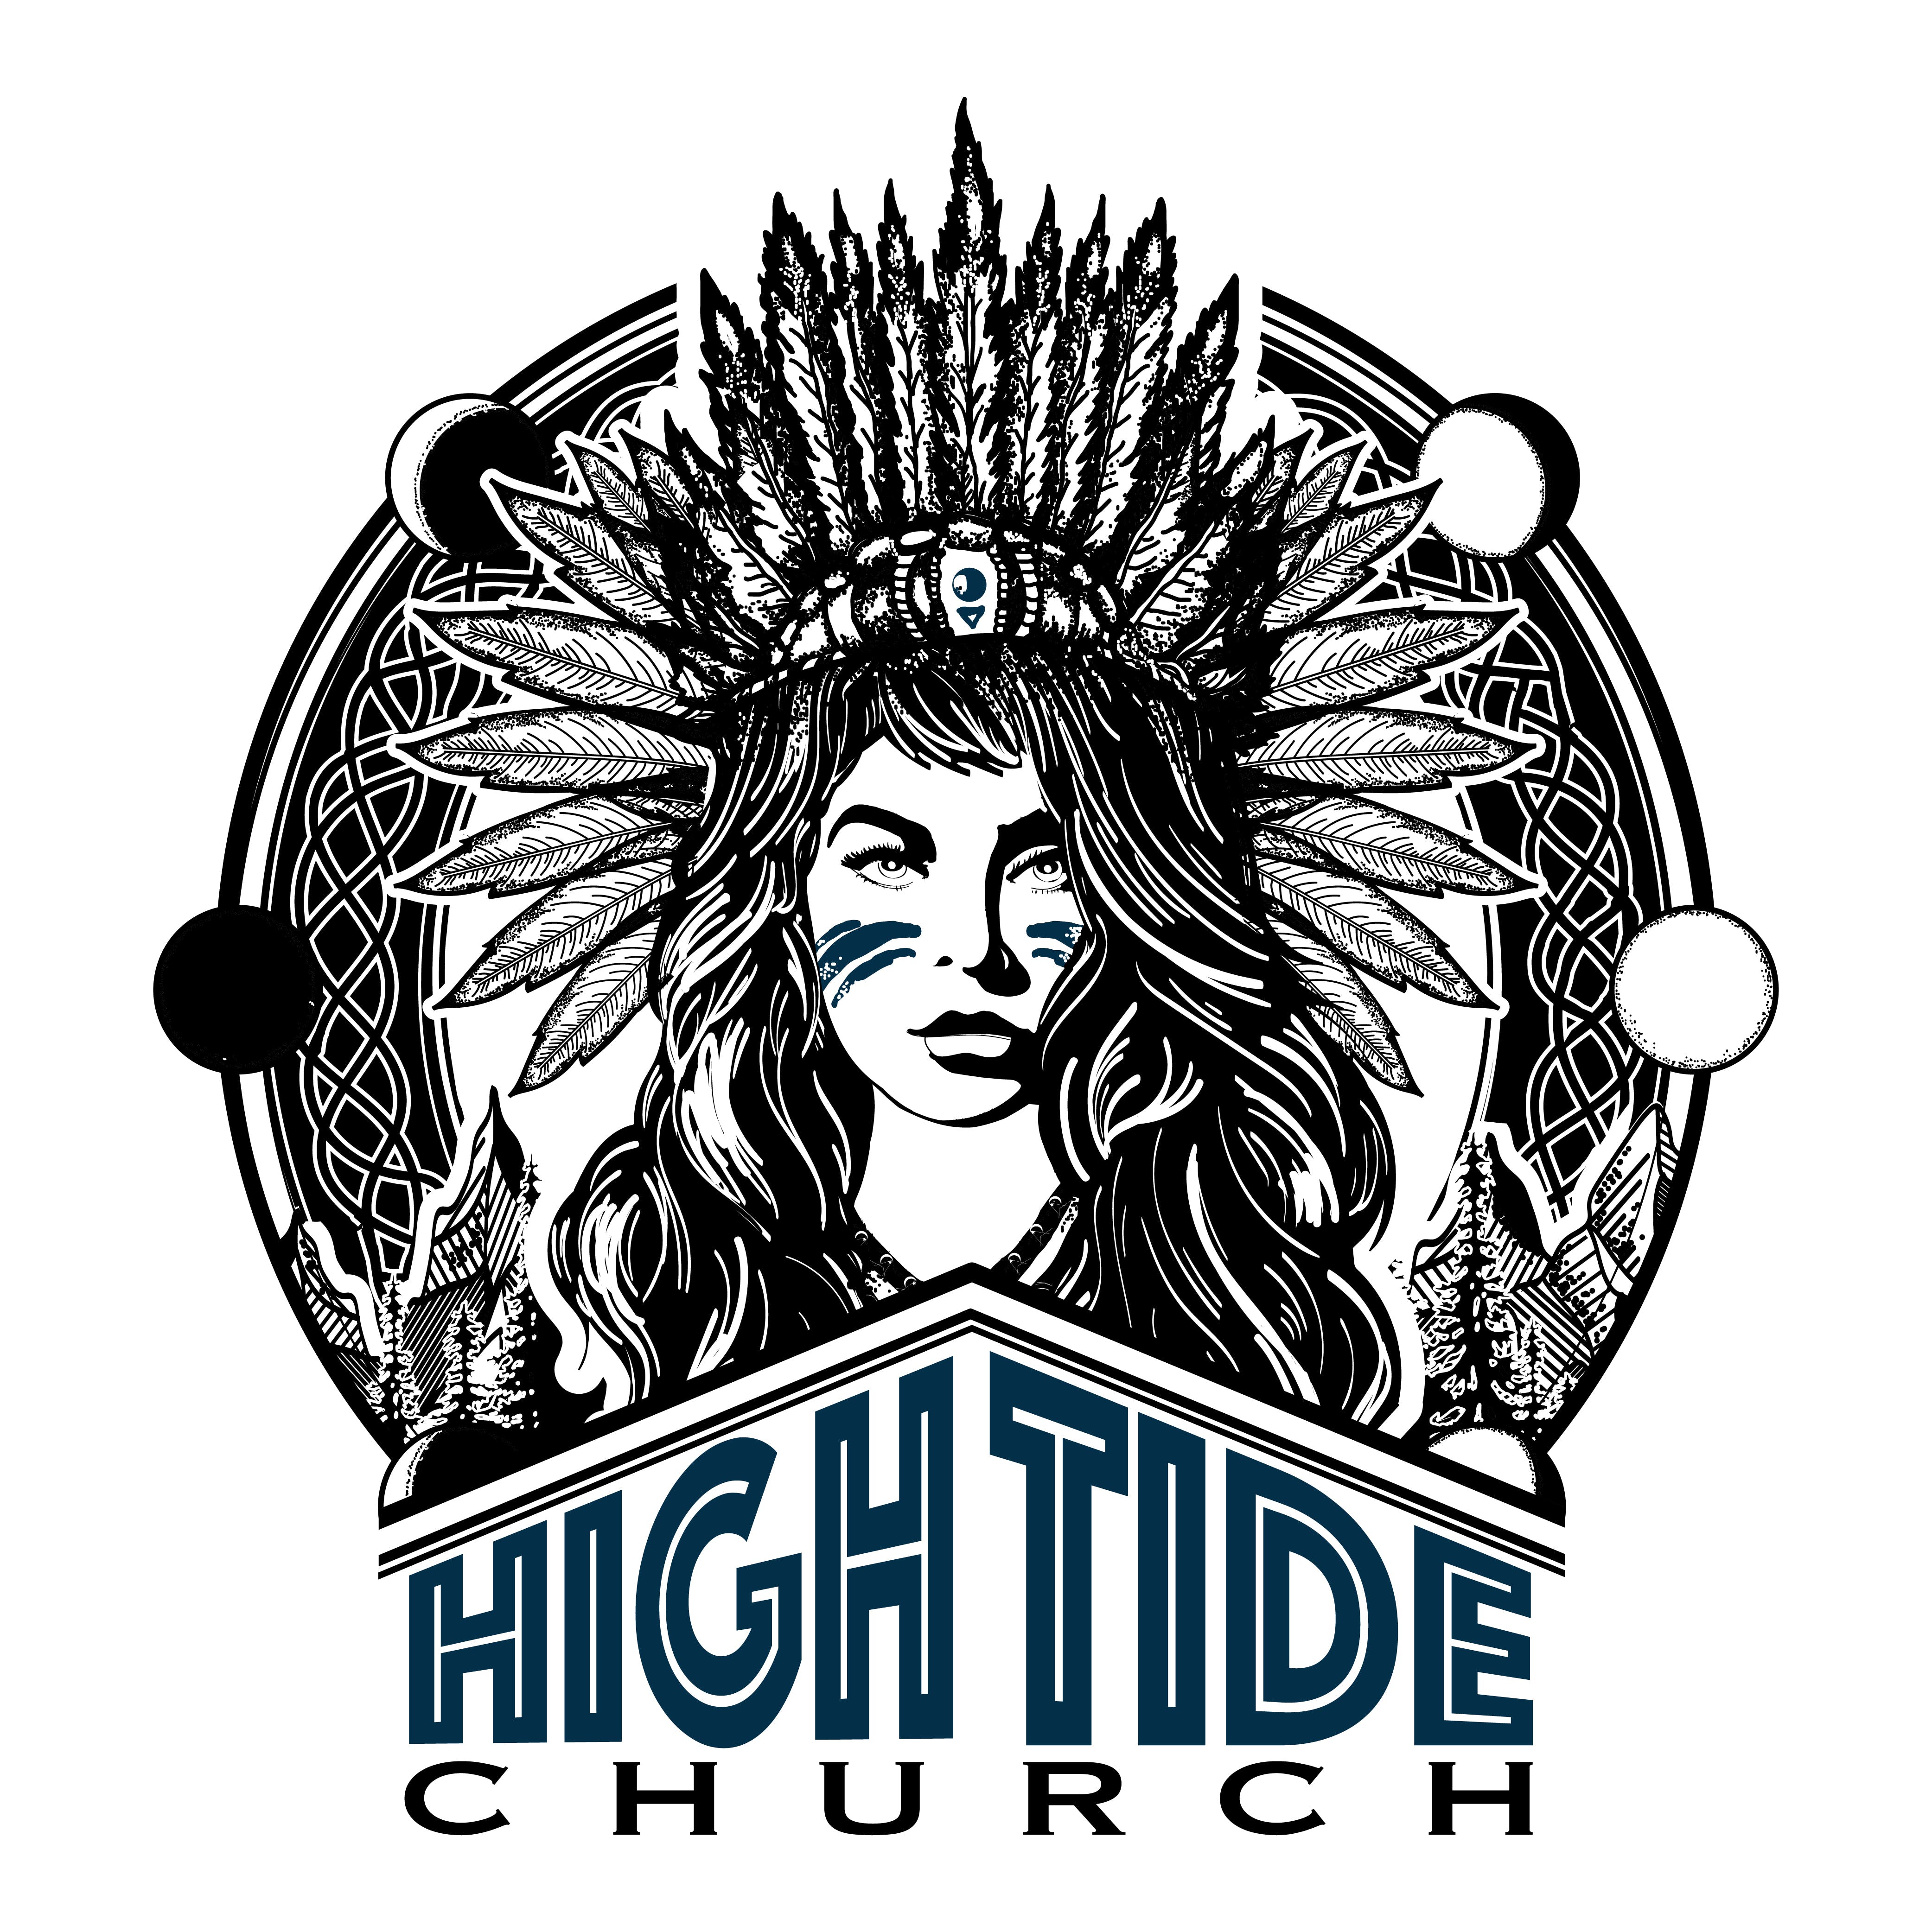 HTC HIGH TIDE CHURCH - Medical Marijuana Doctors - Cannabizme.com